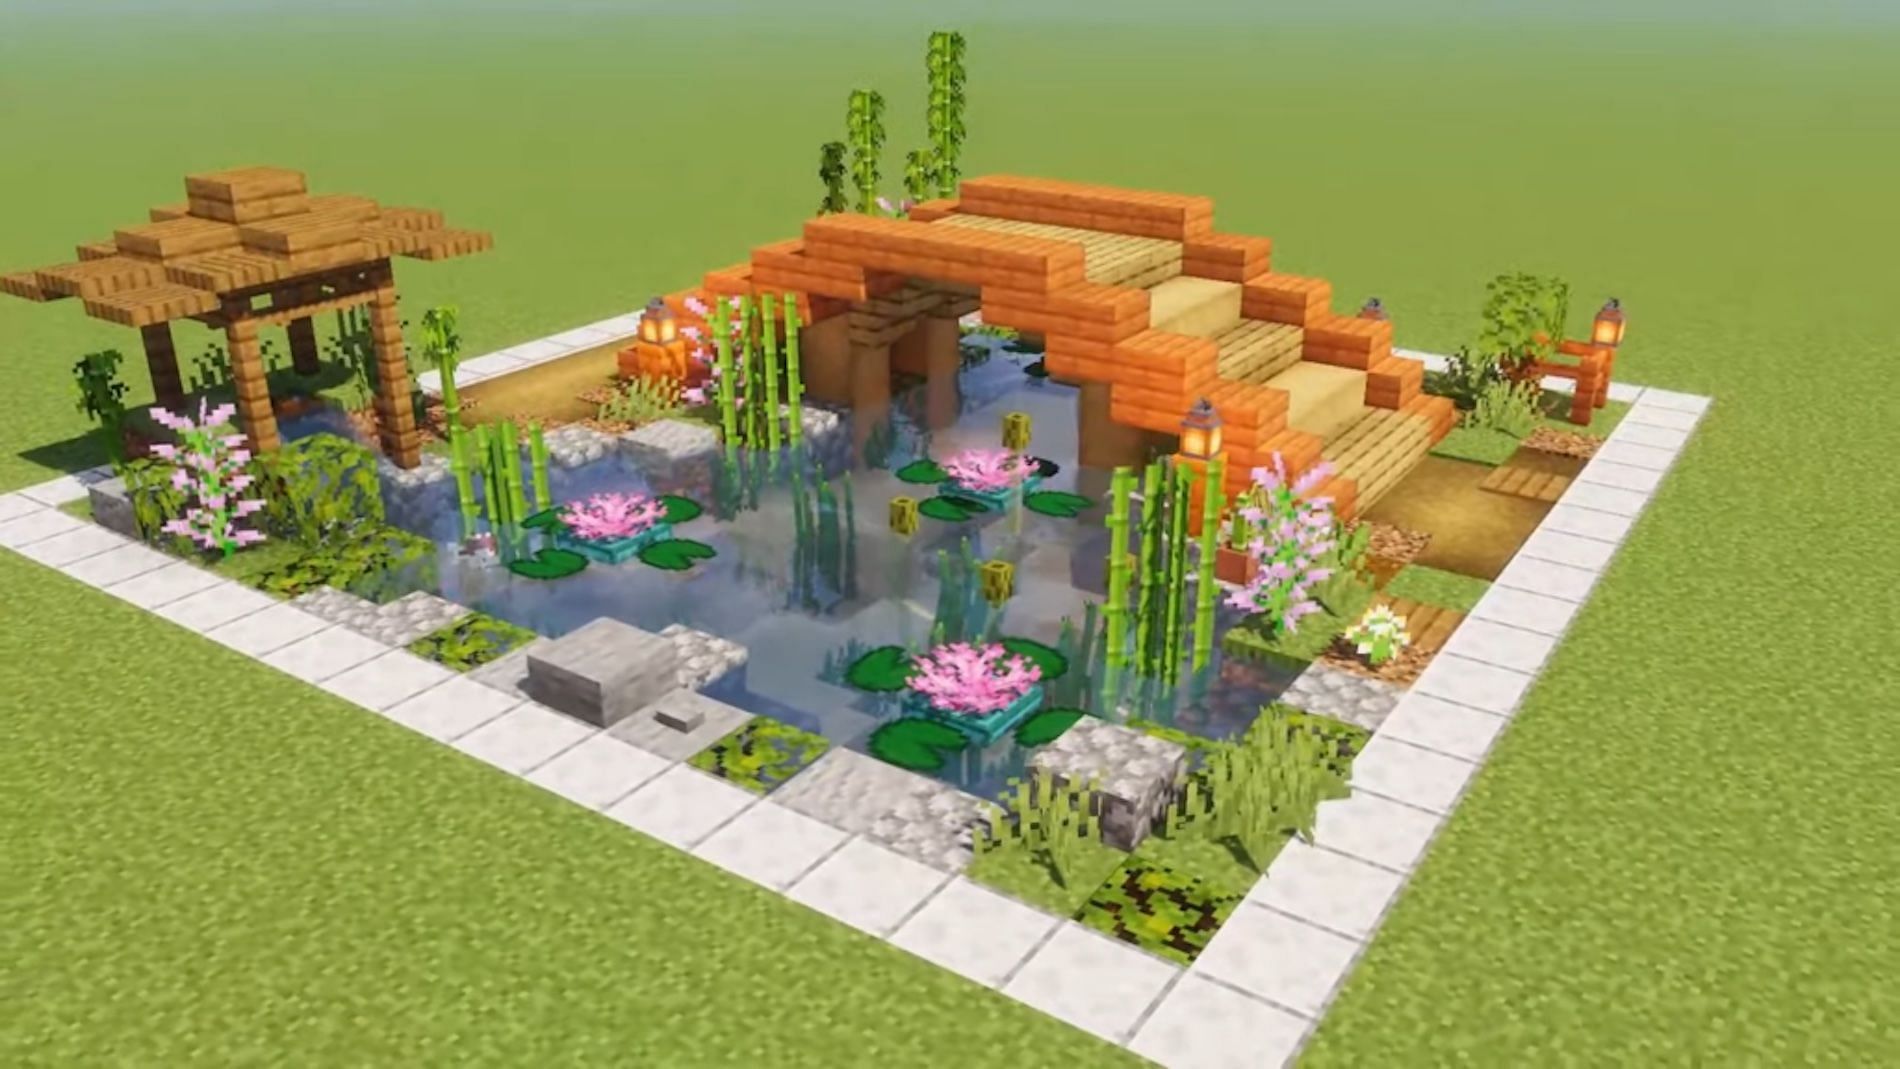 Garden with a bridge (Image via Minecraft)